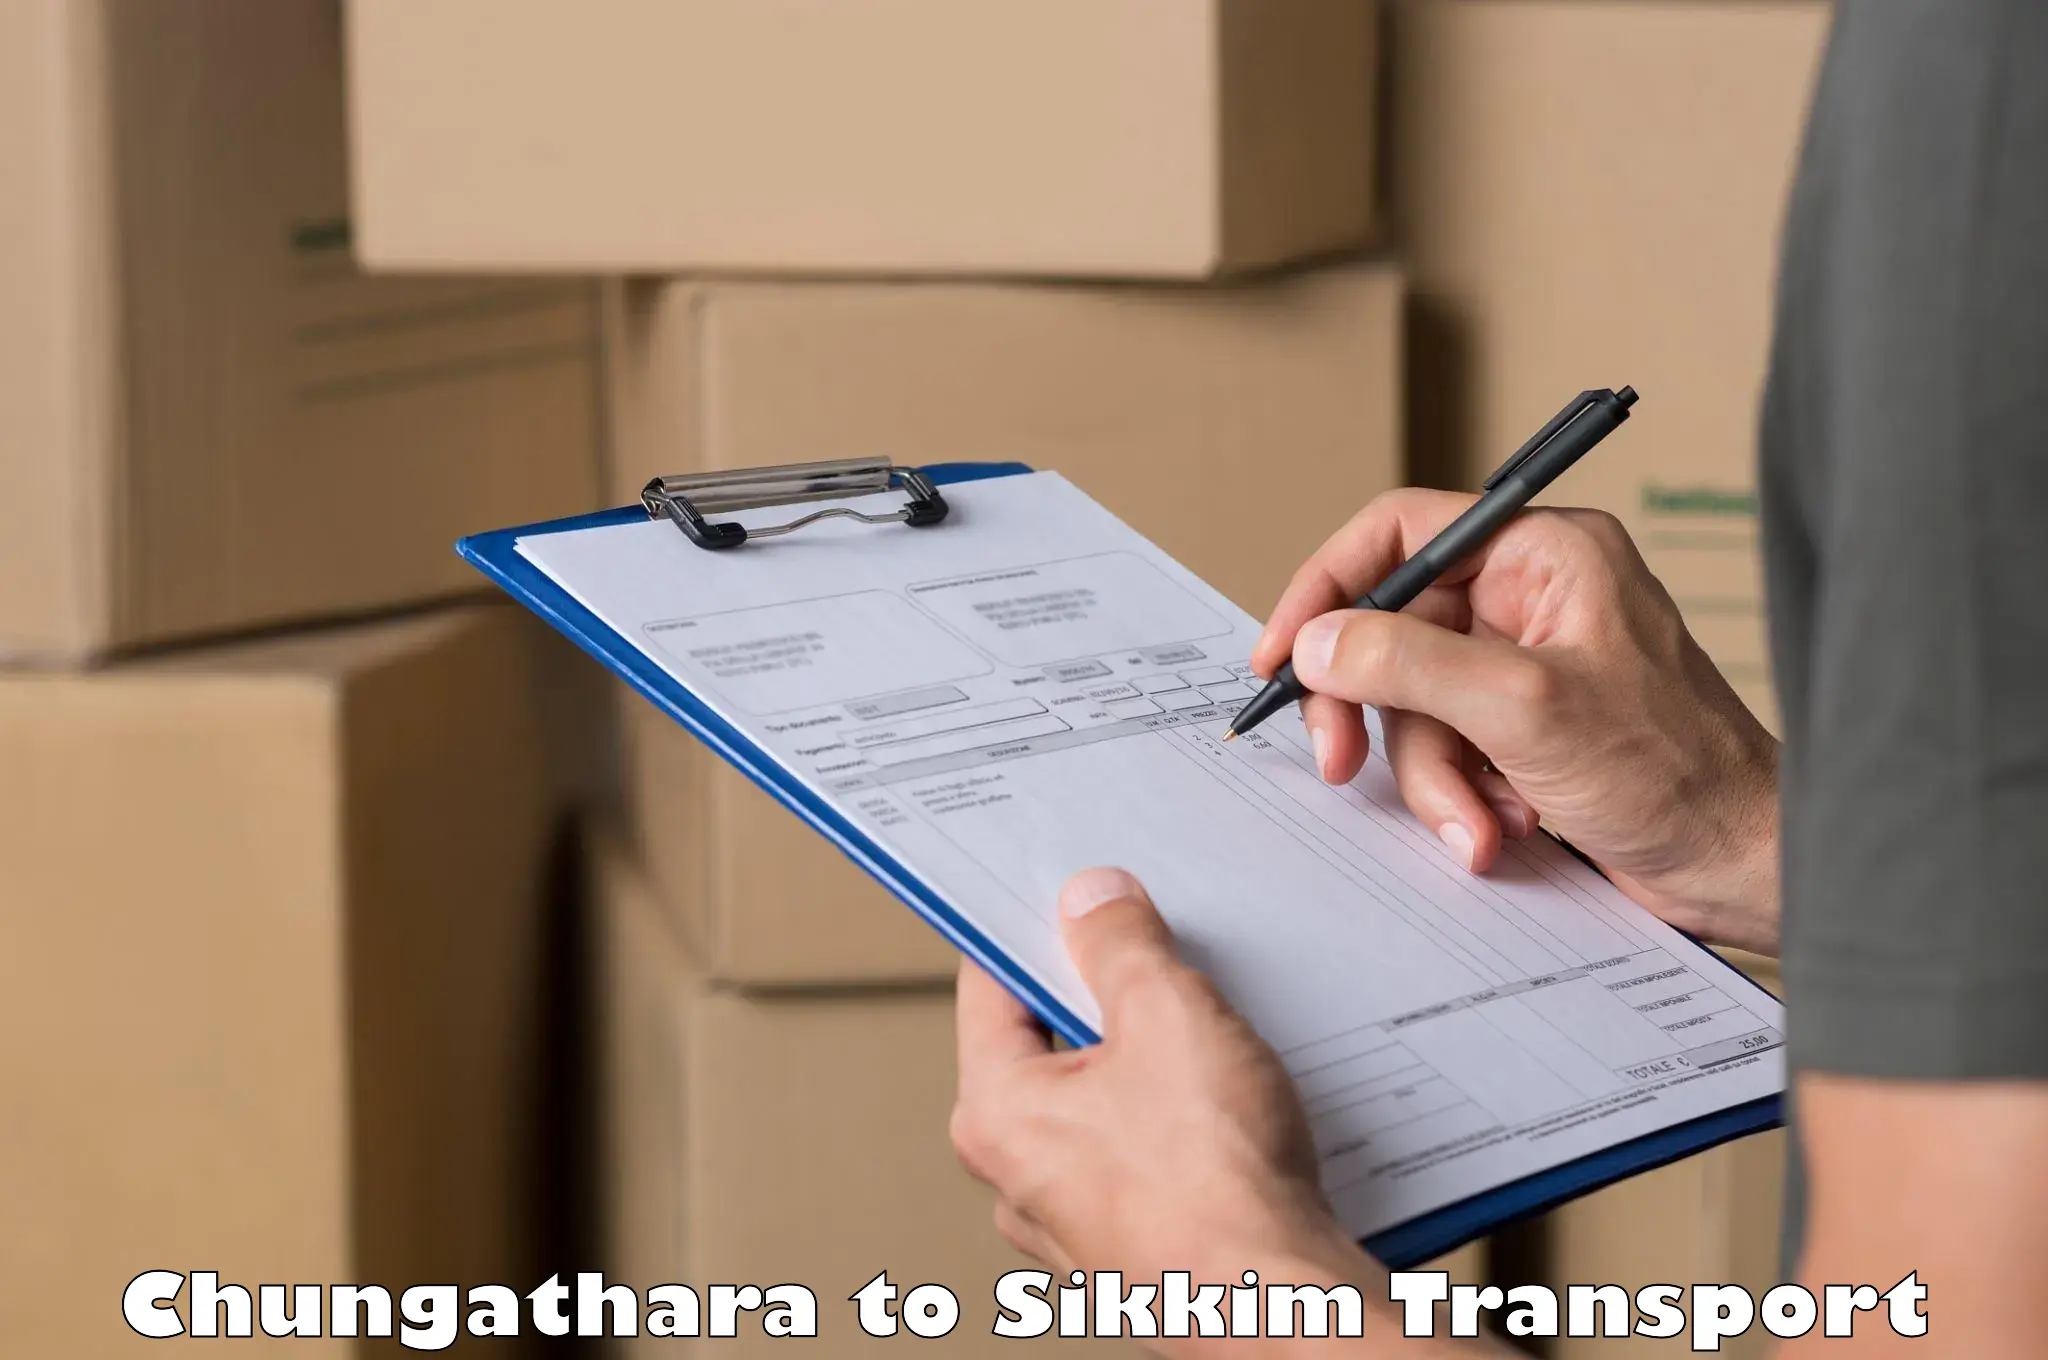 Truck transport companies in India Chungathara to Geyzing